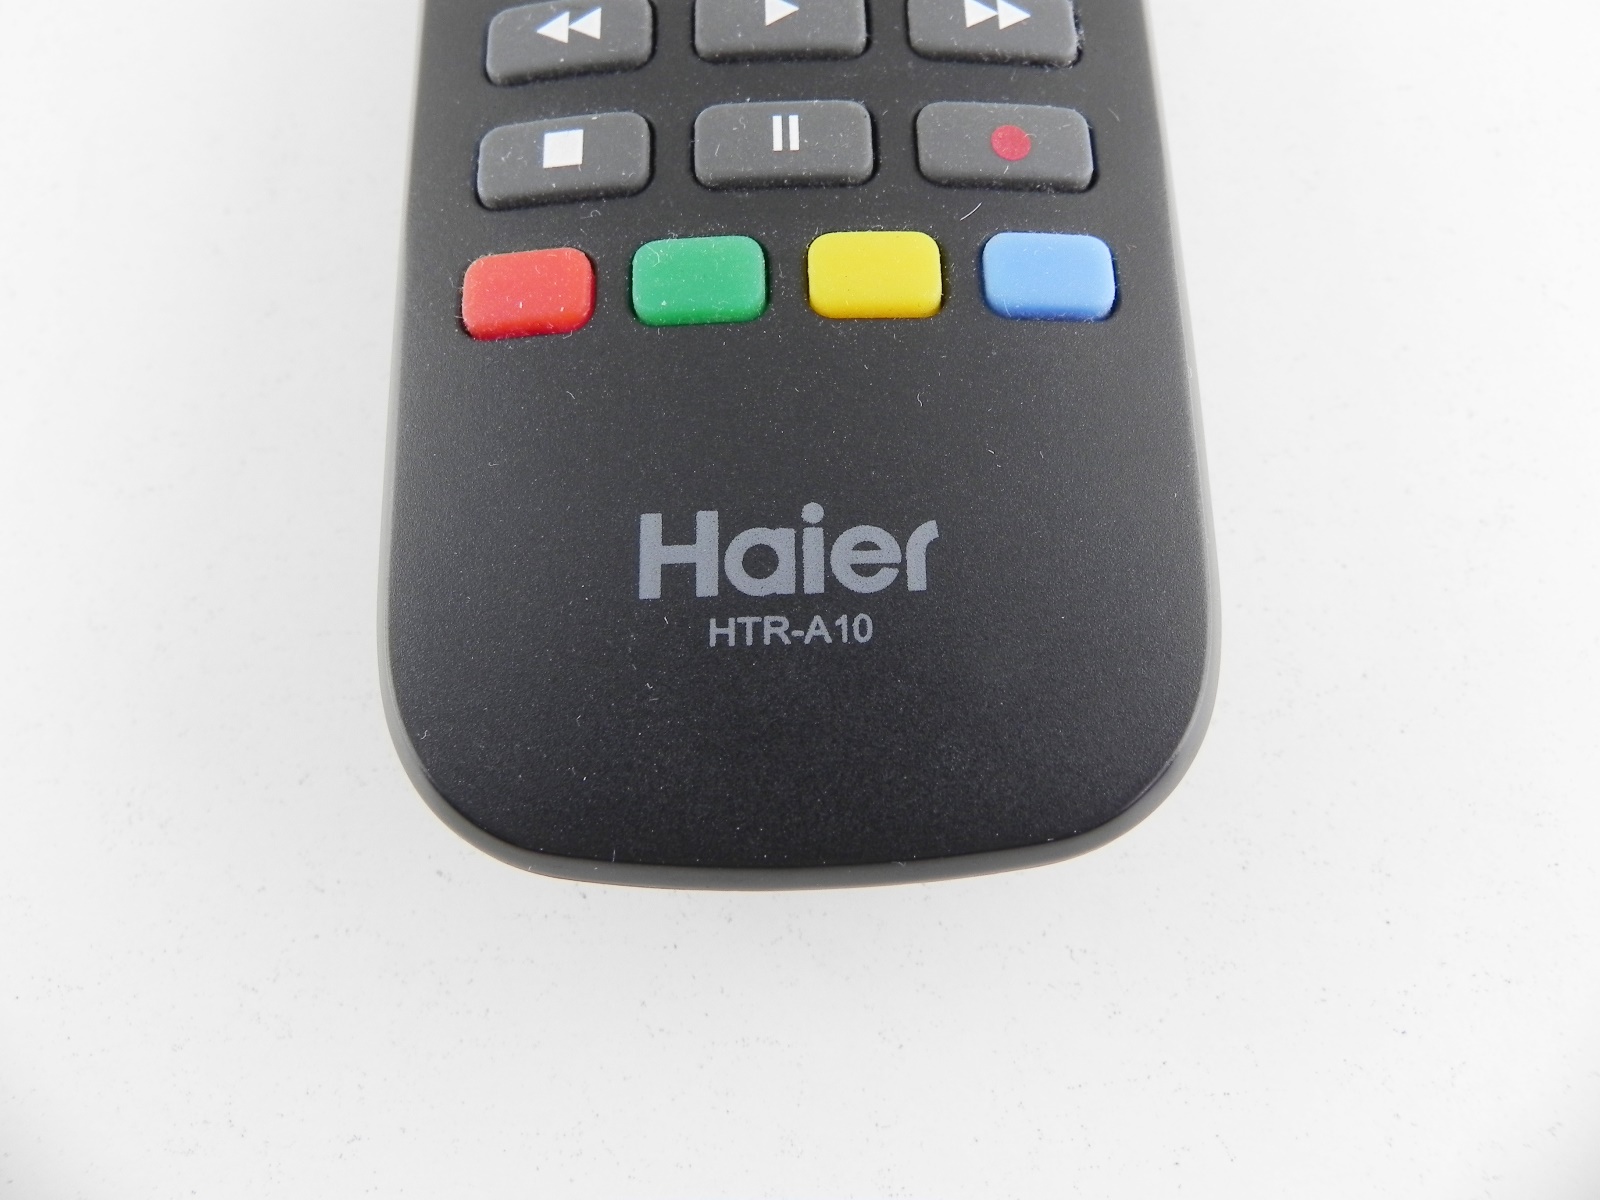 Купить пульт для телевизора haier. Пульт Haier HTR-a10. Haier le32k6000s. HTR-a10 пульт. Пульт для телевизора Haier HTR-a10.